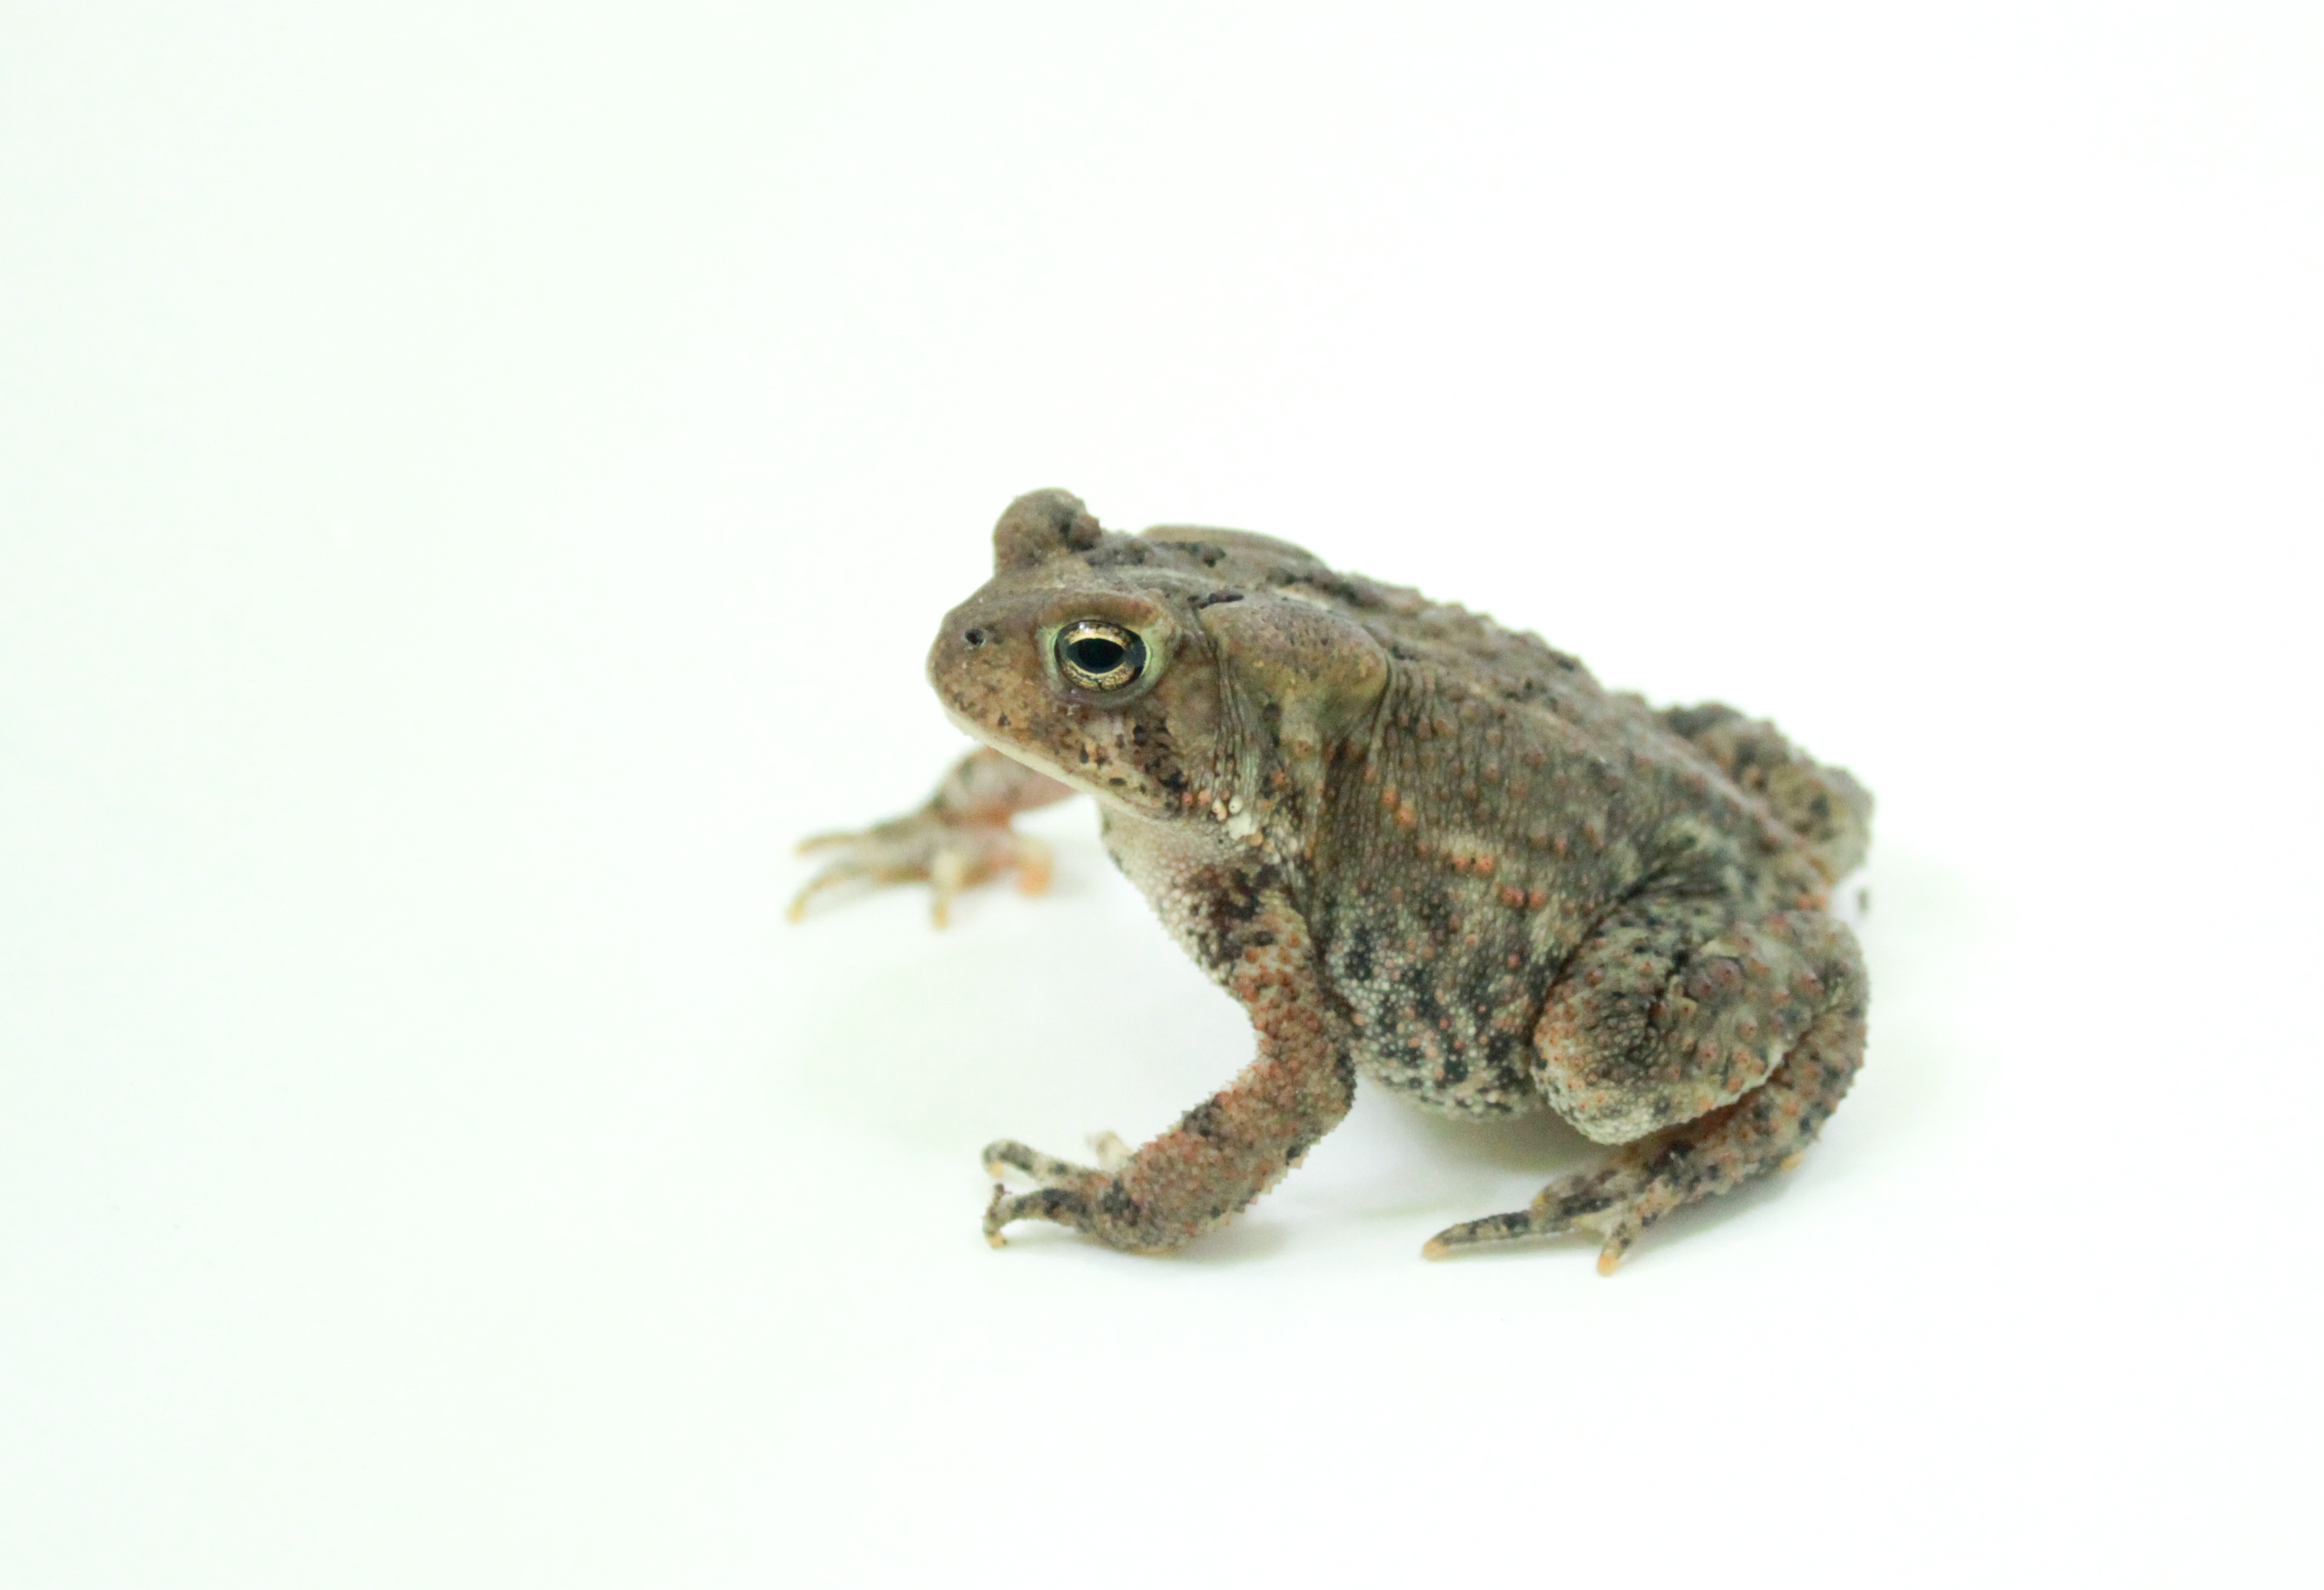 American toad lightbox 2